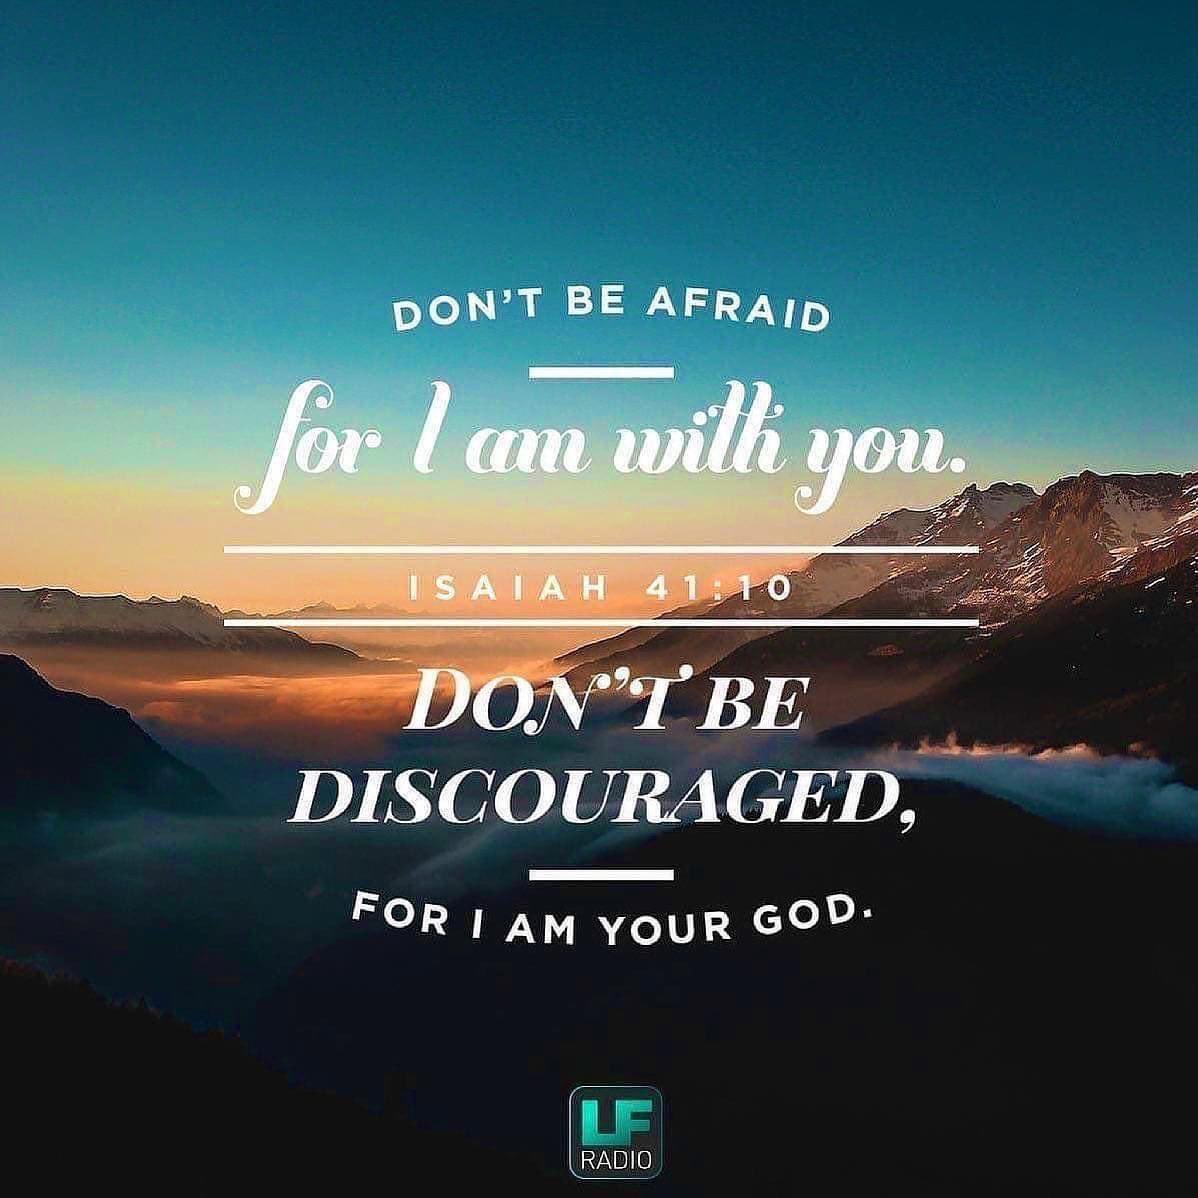 Don’t be afraid. Don’t be discouraged. God is with you. ❤
#dontbeafraid #dontbediscouraged #godiswithyou #godwillhelpyou